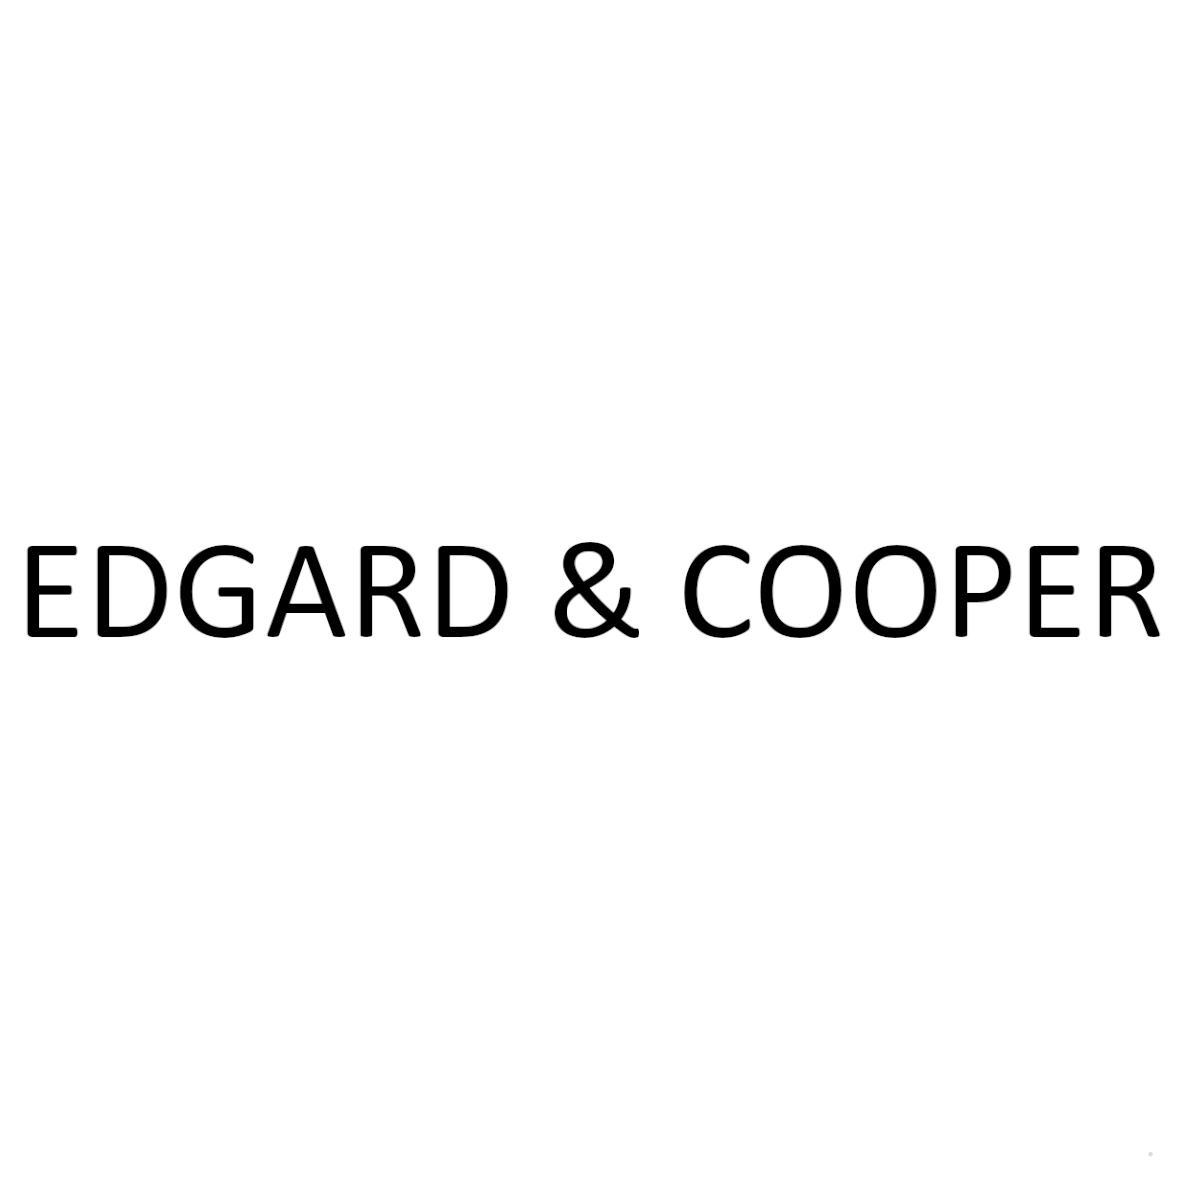 EDGARD & COOPERlogo